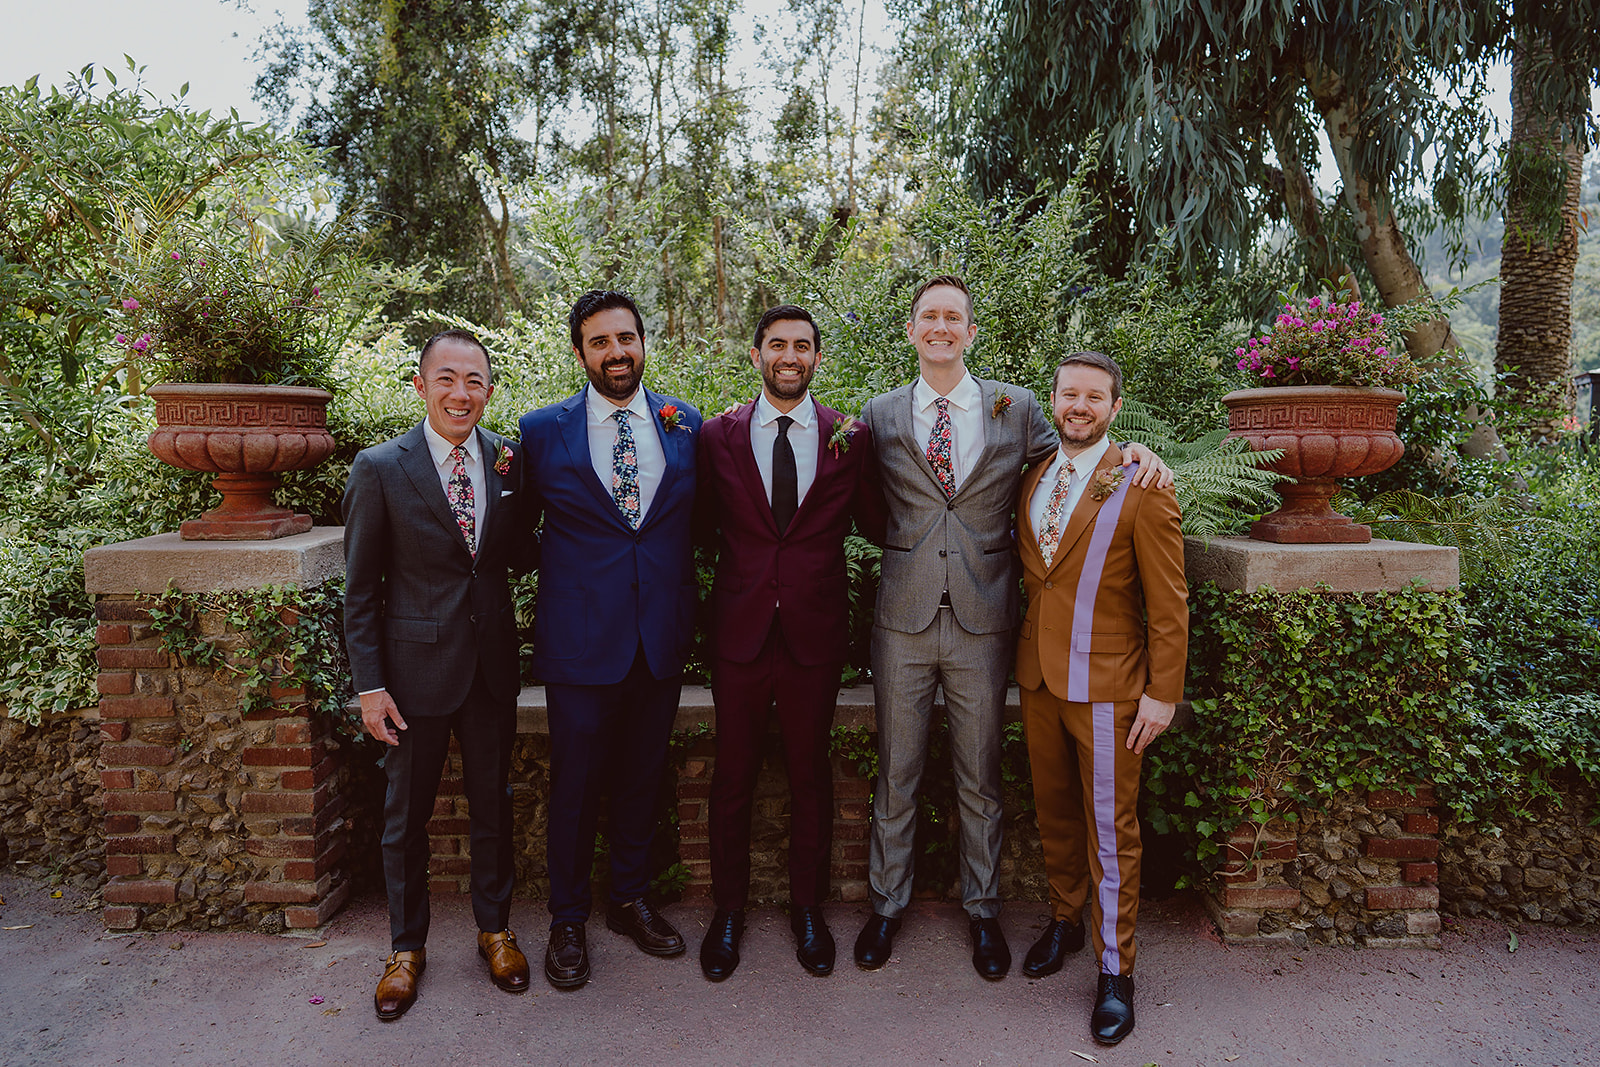 groom in Burgundy suit stands with groomsmen in mixed suits